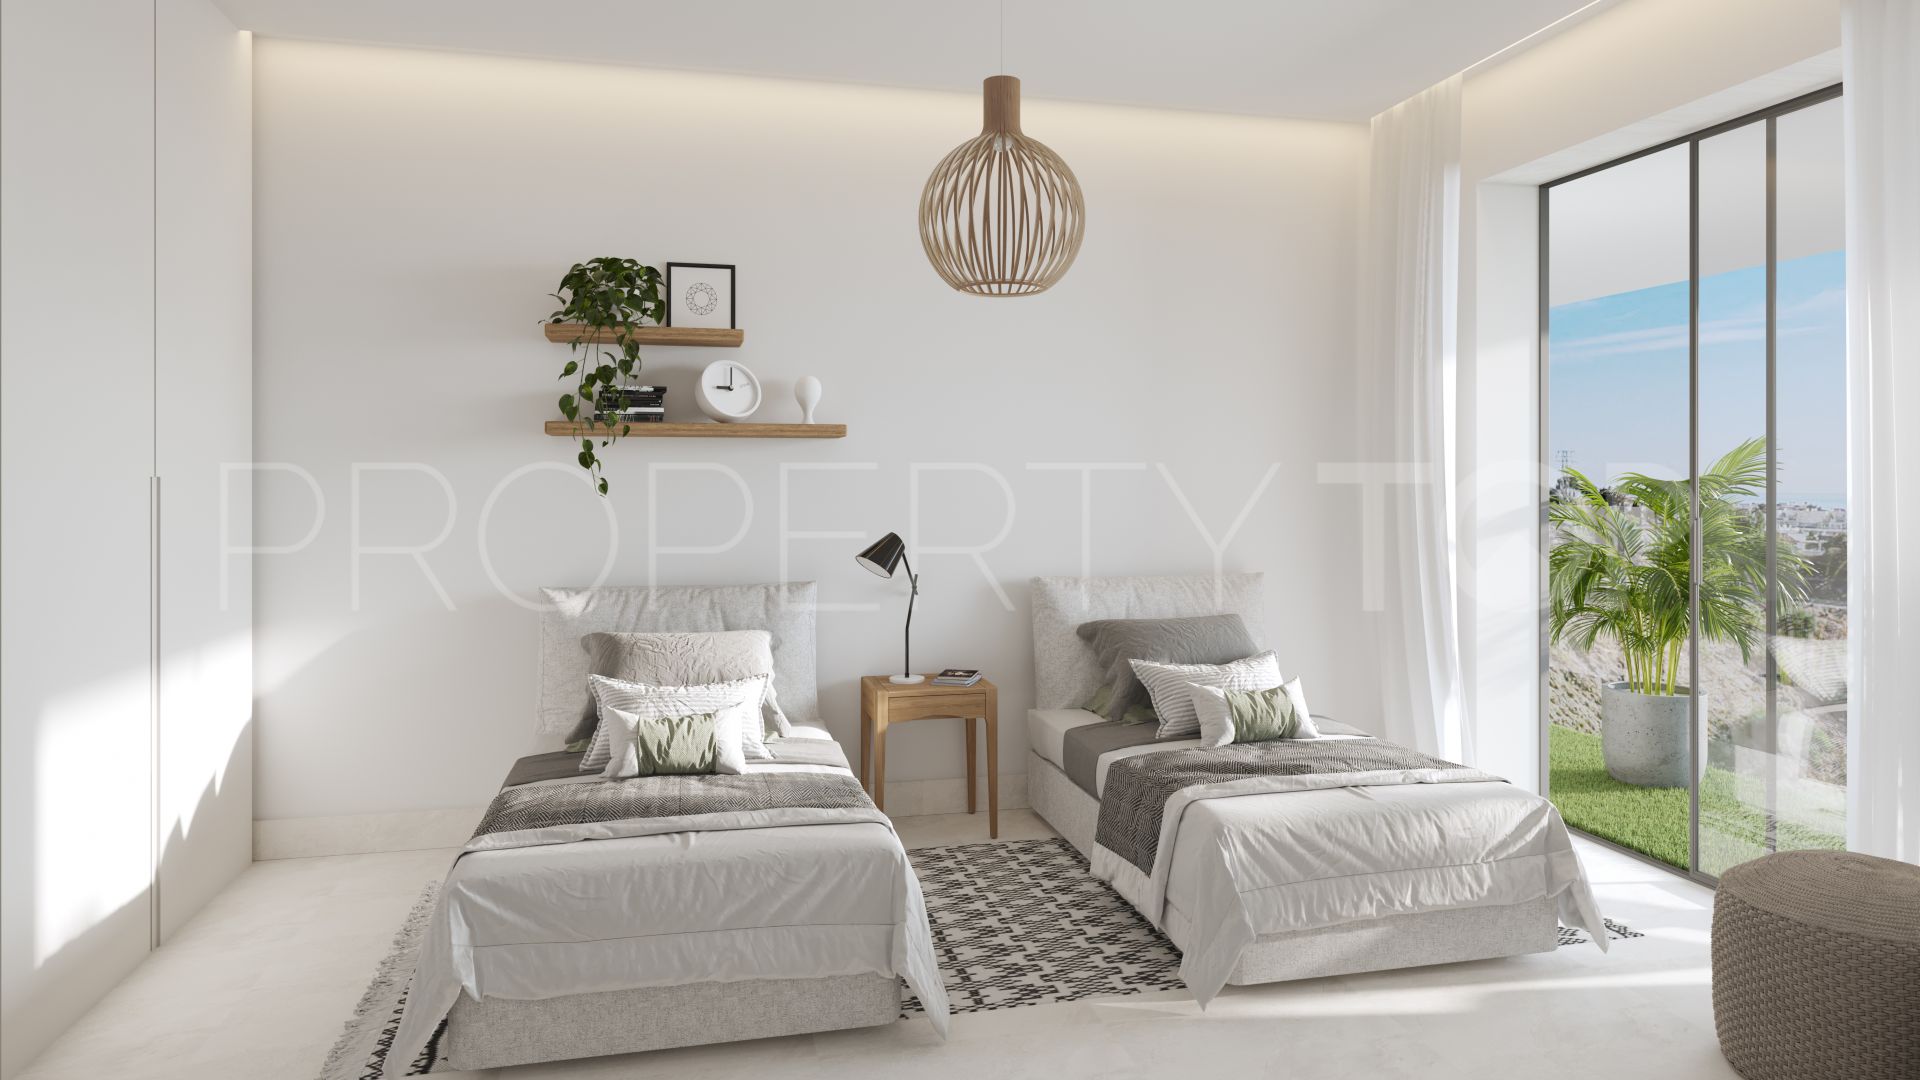 4 bedrooms semi detached villa in Reserva del Higuerón for sale